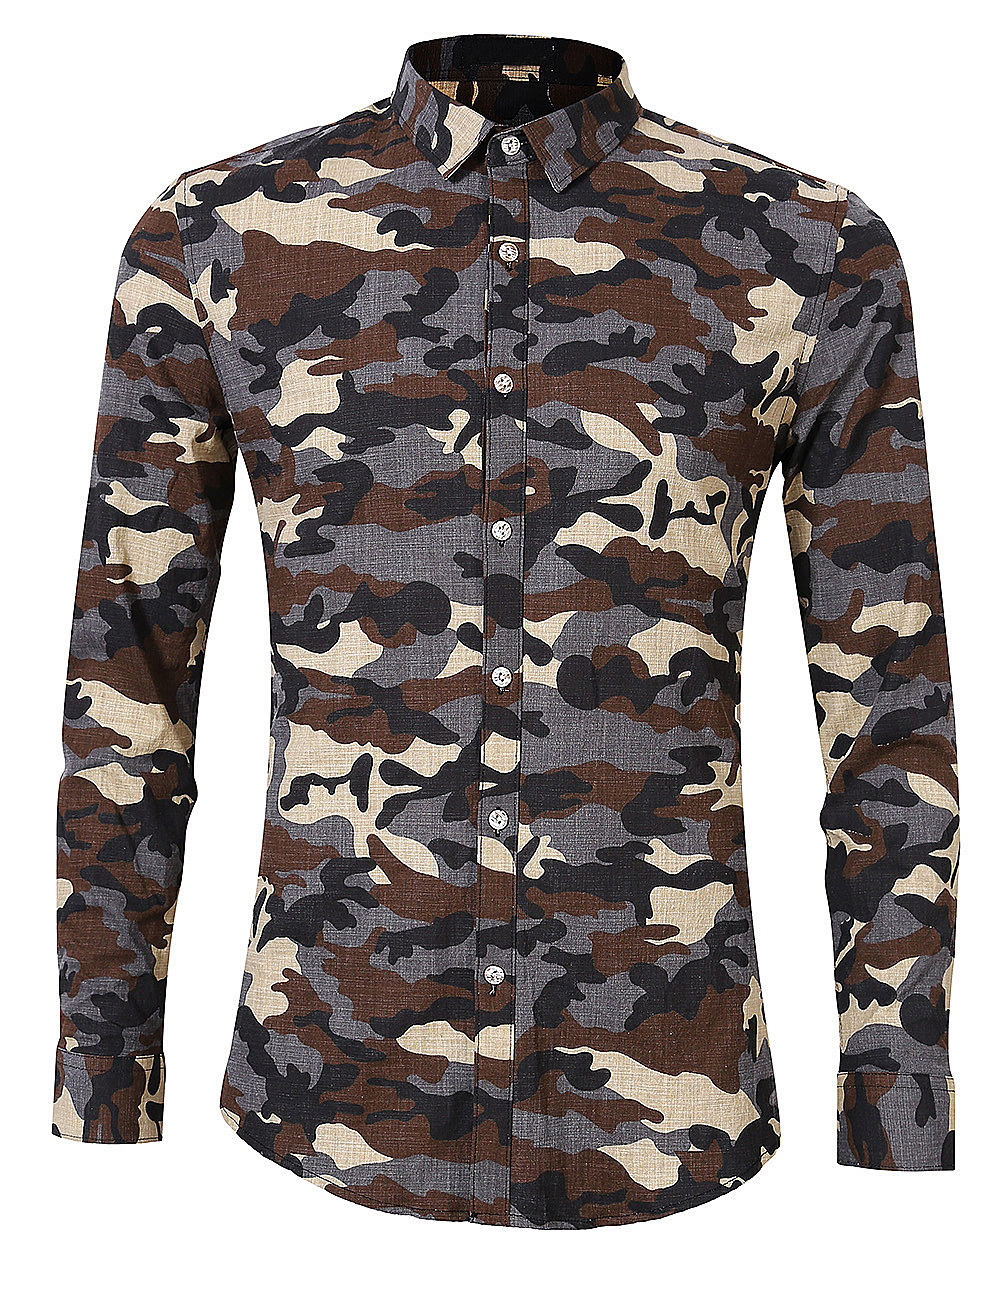 US Yong Horse Men's Fashion Print Long Sleeve Camouflage Shirt